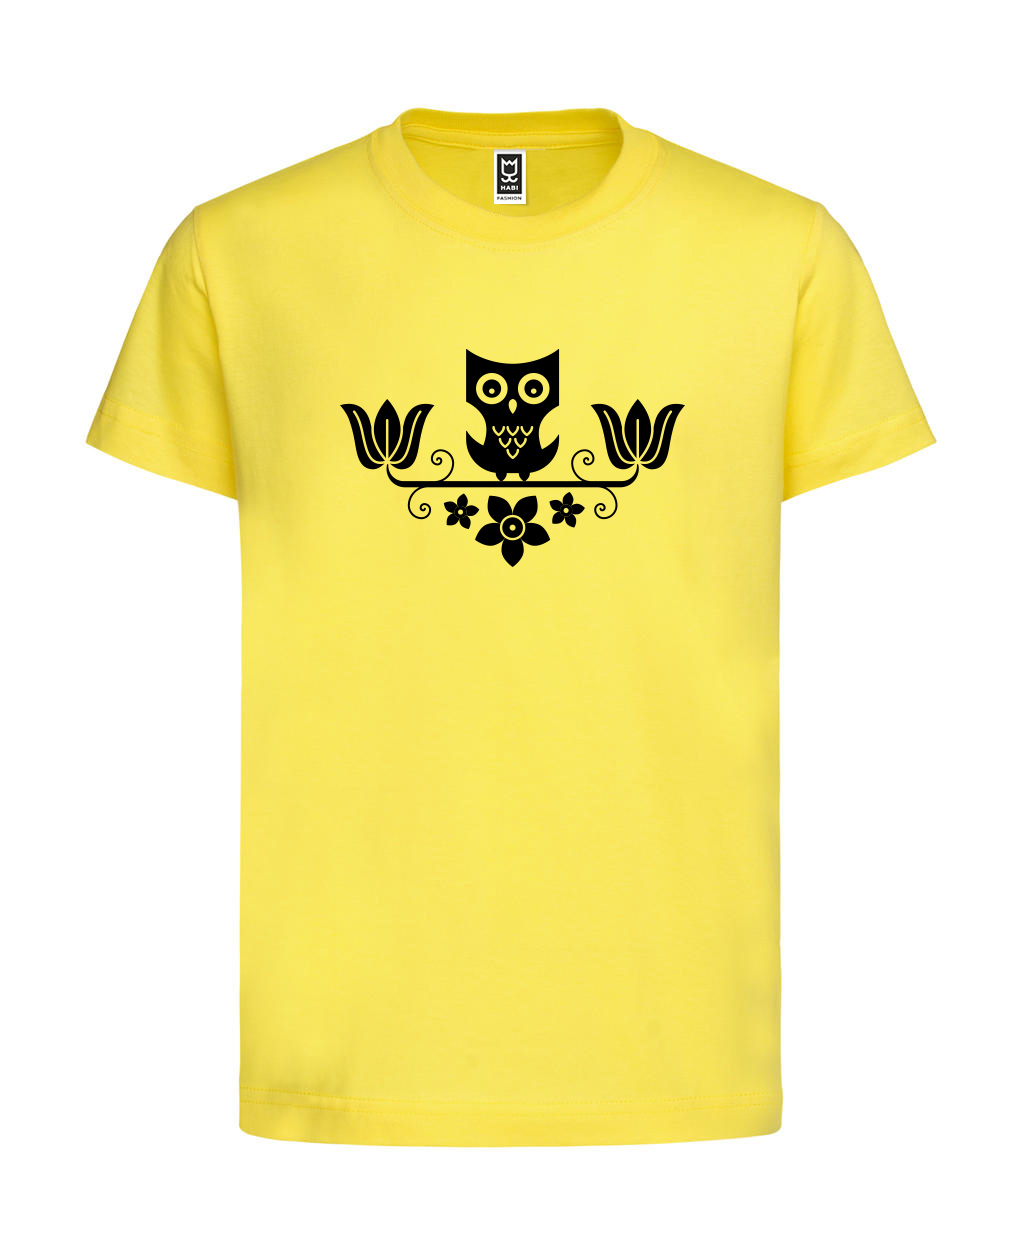 Detské tričko múdra sova, Nitrianske Pravno - Yellow